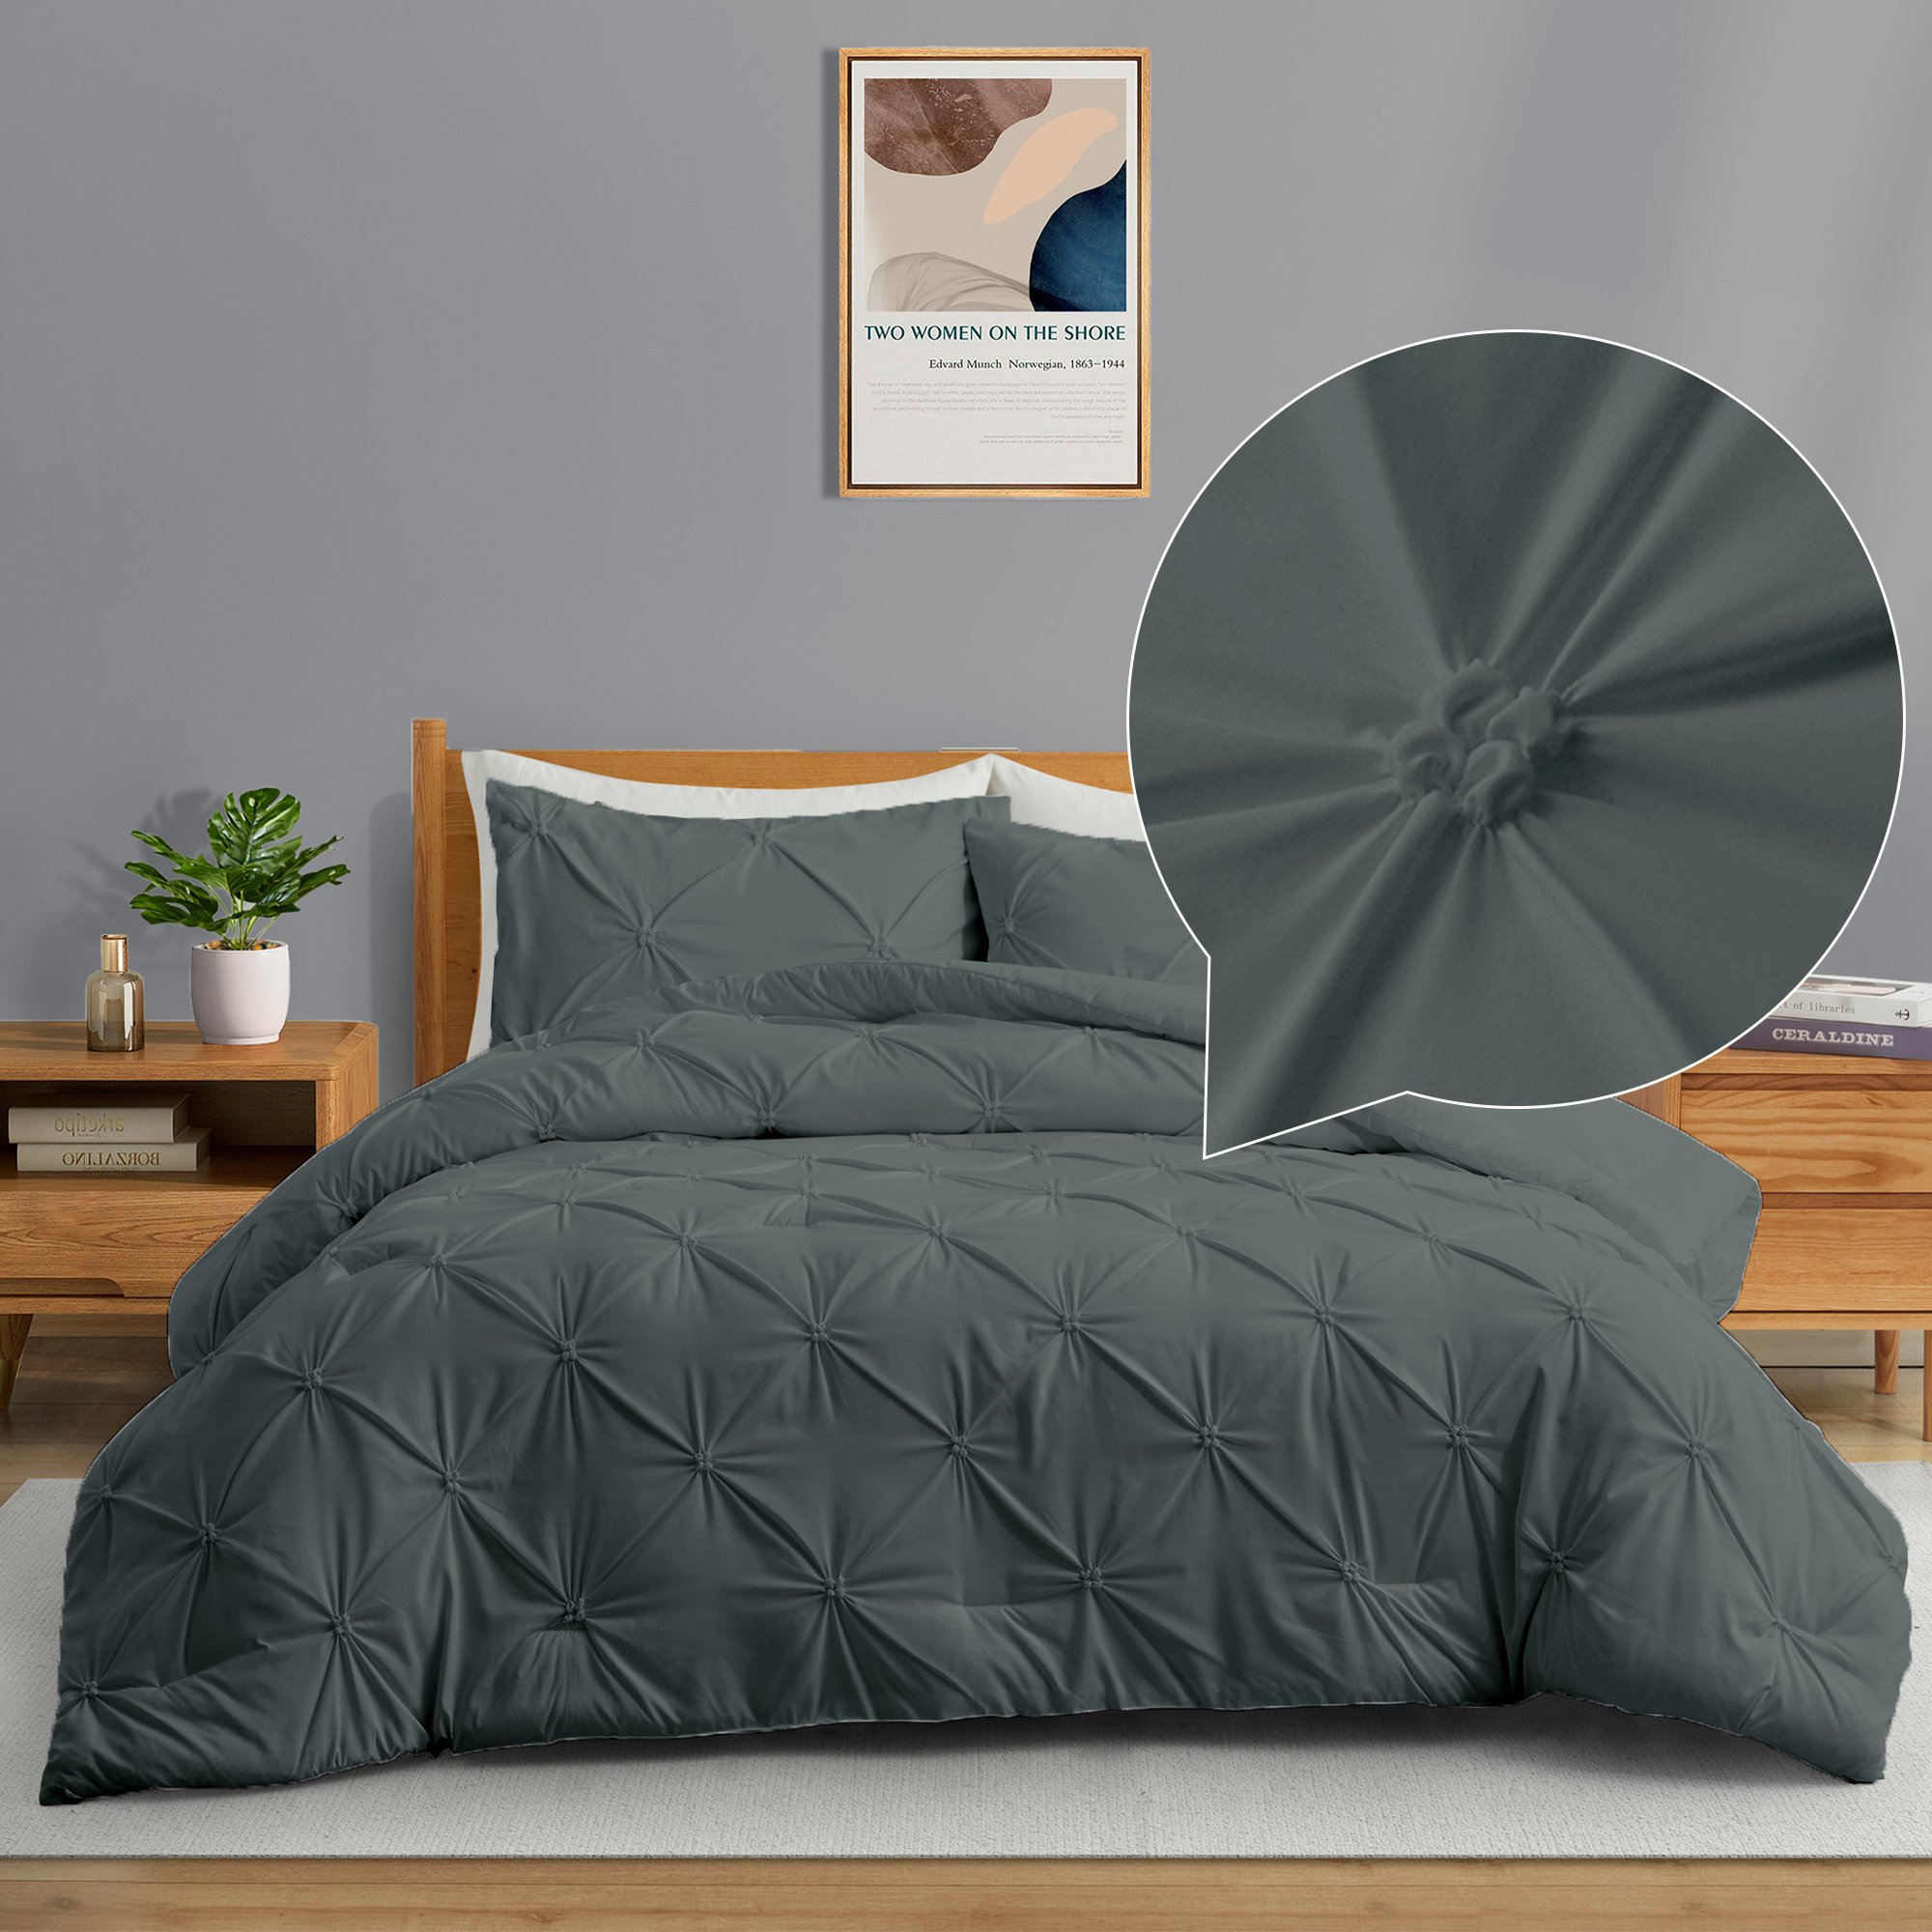 Pinch Pleat Duvet And Comforter Set - All Season Down Alternative Comforter - Twin Size